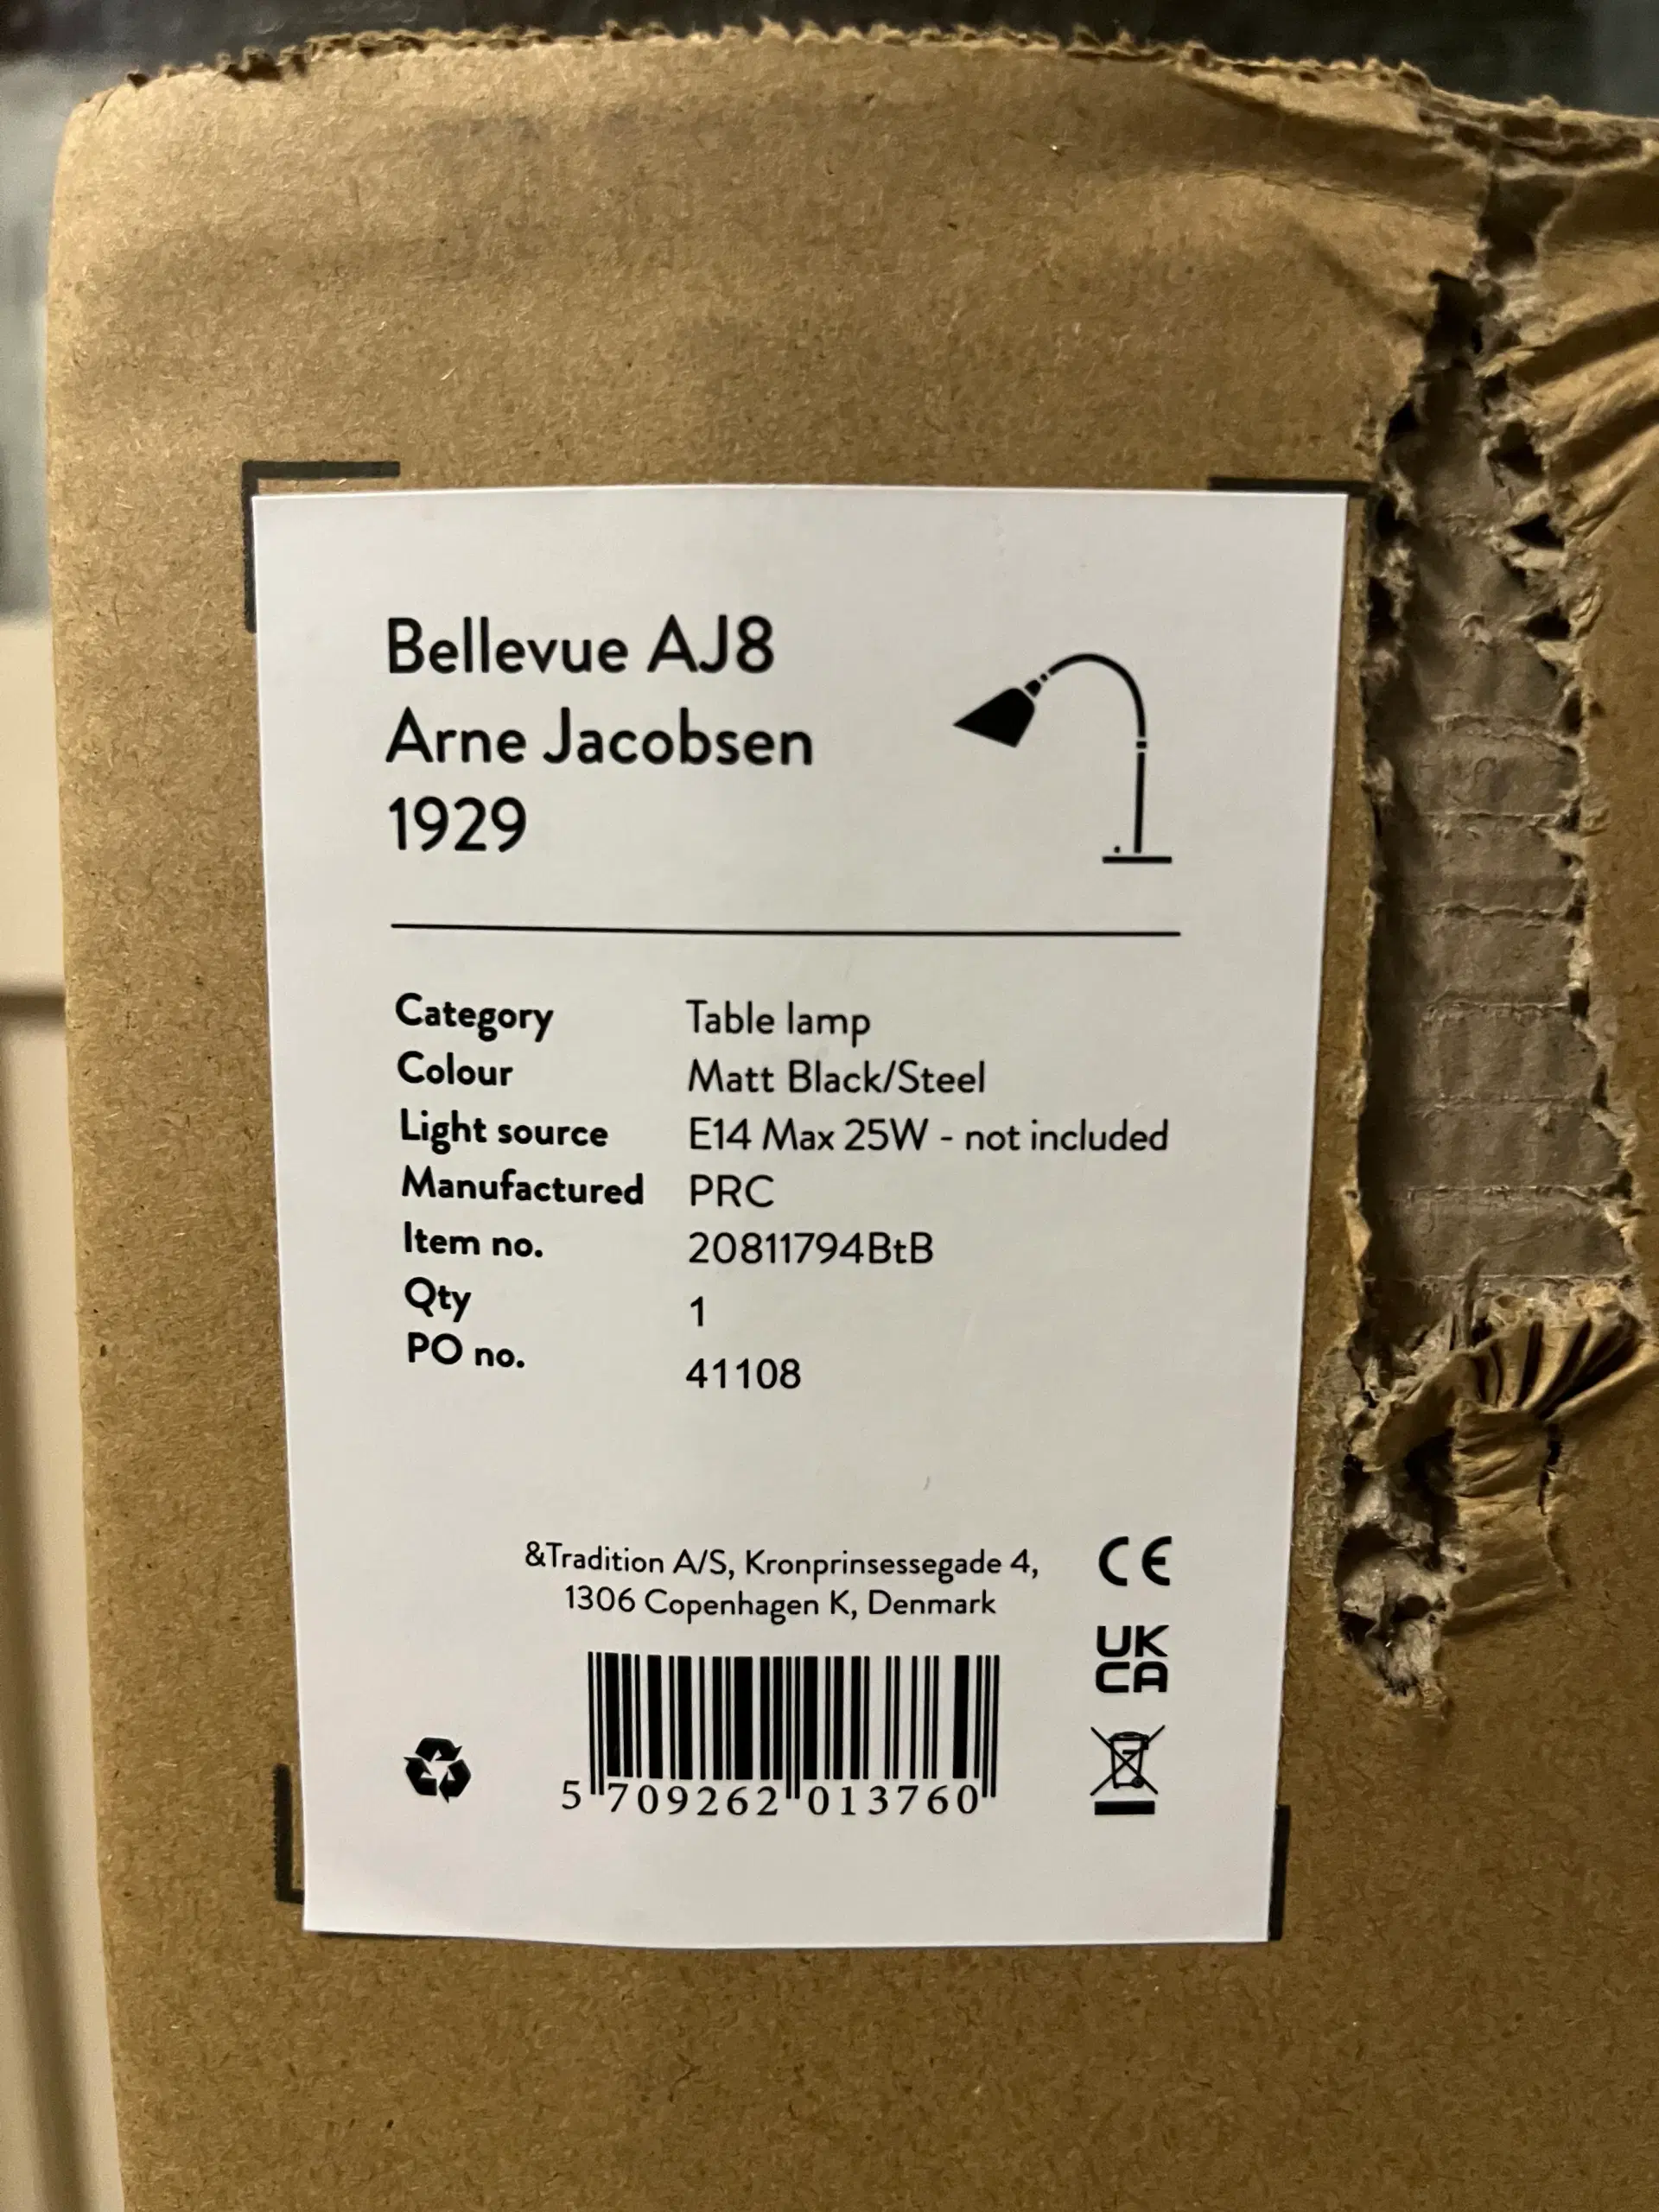 Arne Jacobsen AJ8 Bellevue